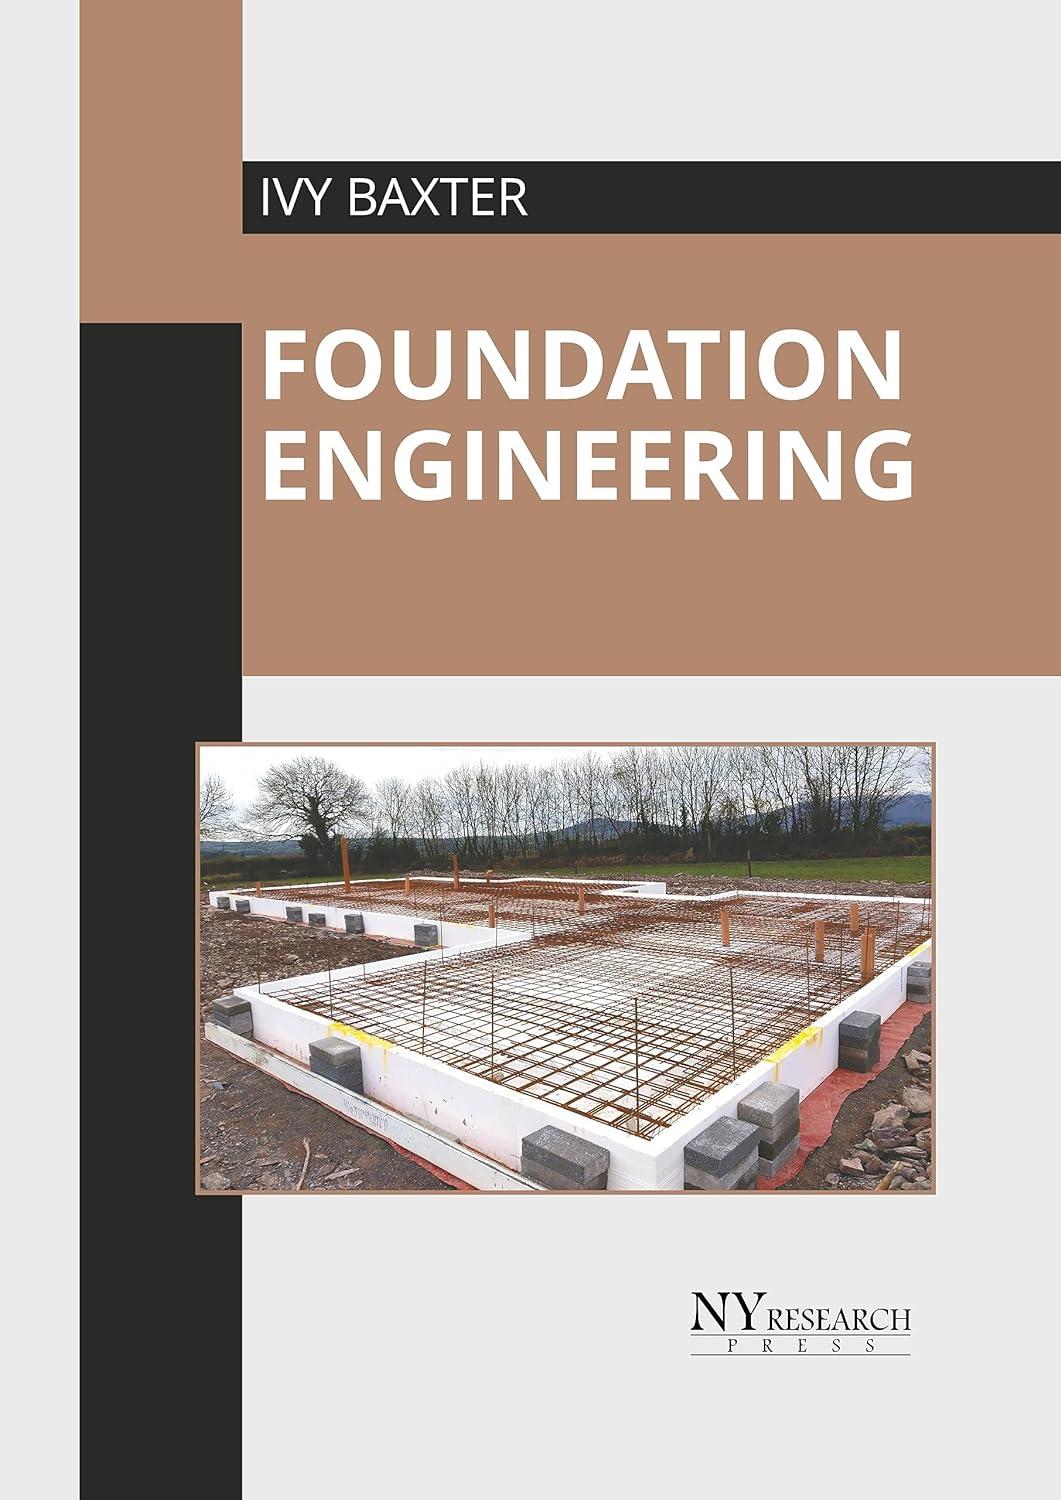 foundation engineering 1st edition ivy baxter 1647254221, 978-1647254223